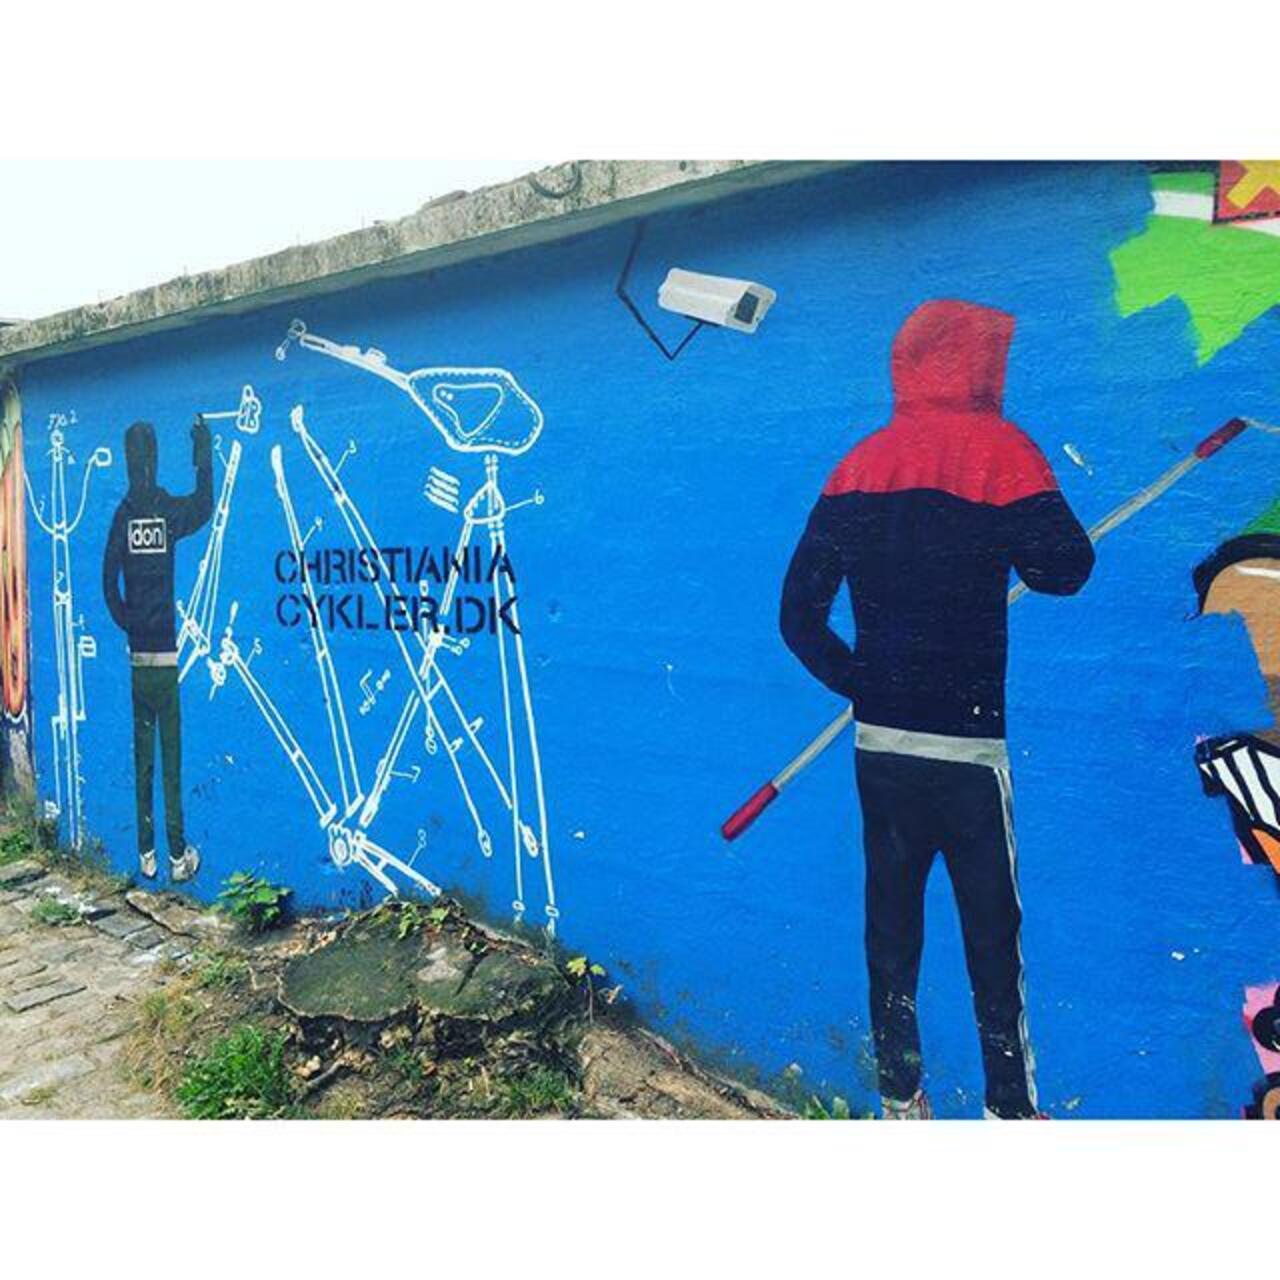 RT @artpushr: via #social_media_ninja "http://bit.ly/1VEE1dN" #graffiti #streetart http://t.co/kAqaUM6O2t